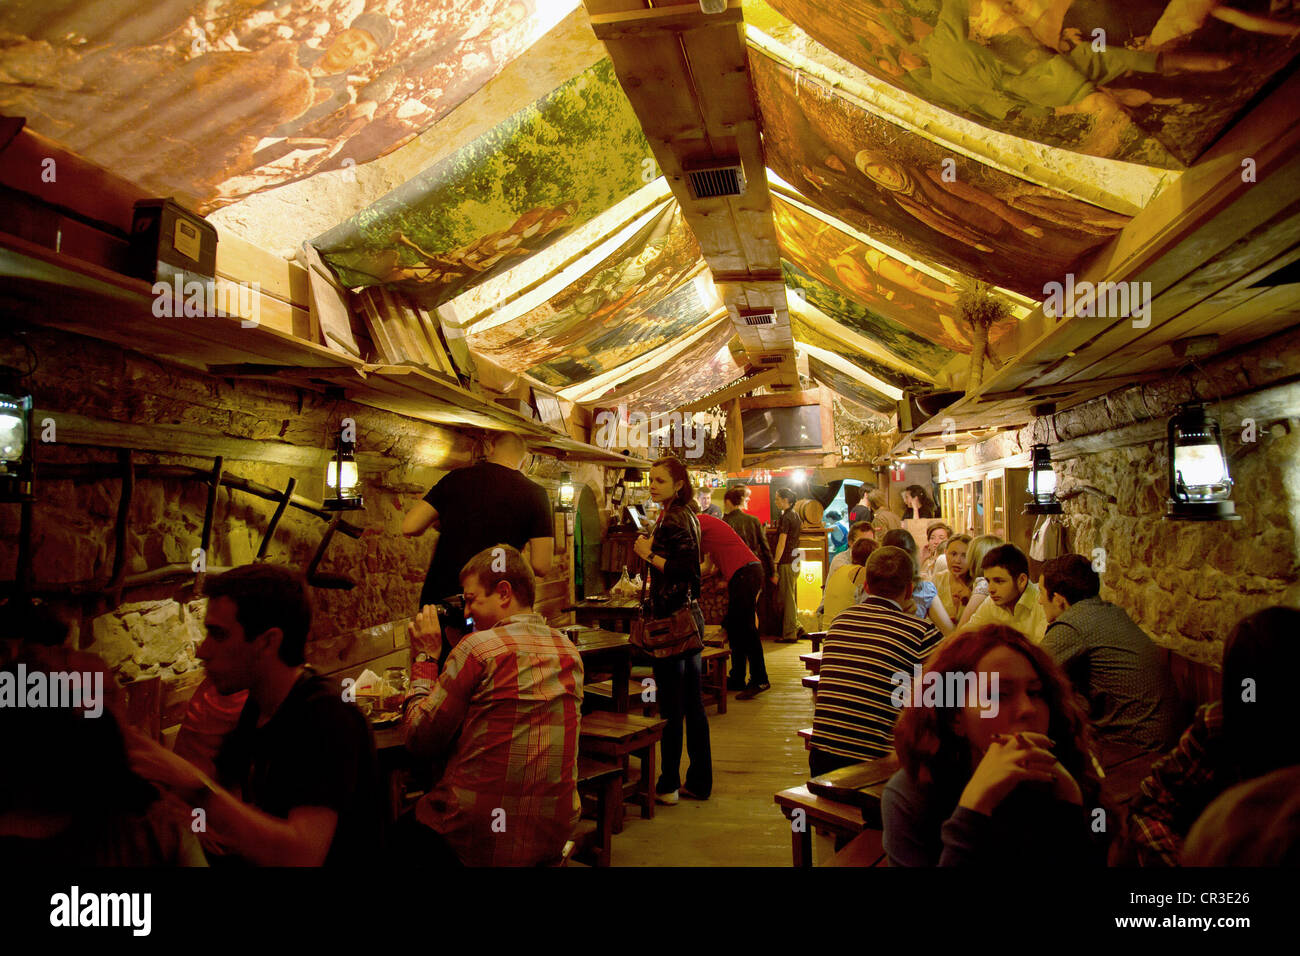 The pub KRIJIWKA (hiding place) located in a cellar in the market square, Lviv, Ukraine Stock Photo